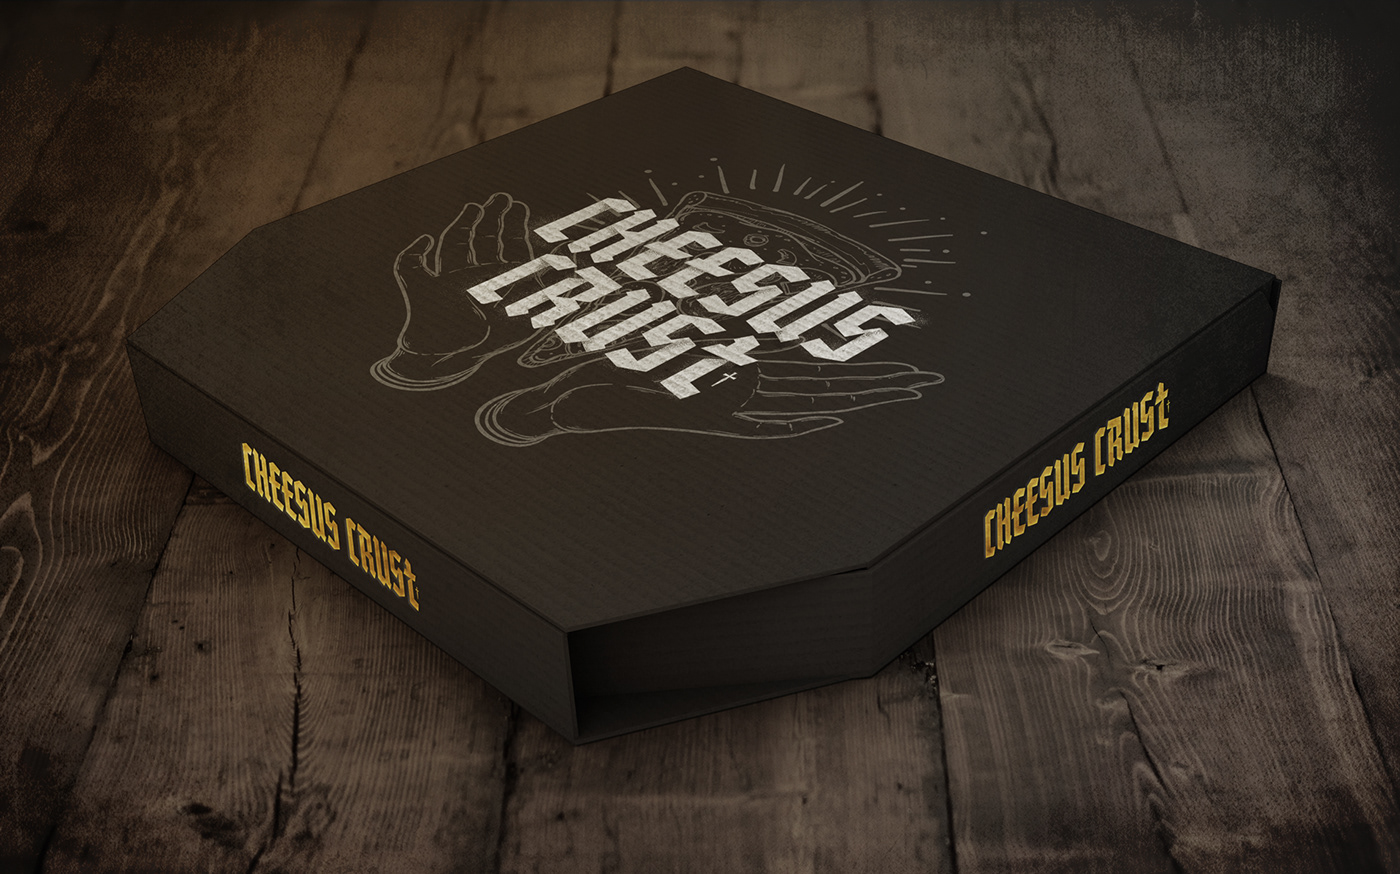 Pizza restaurant pizzeria Cheesus branding  bible jesus logo graphic design  Toronto